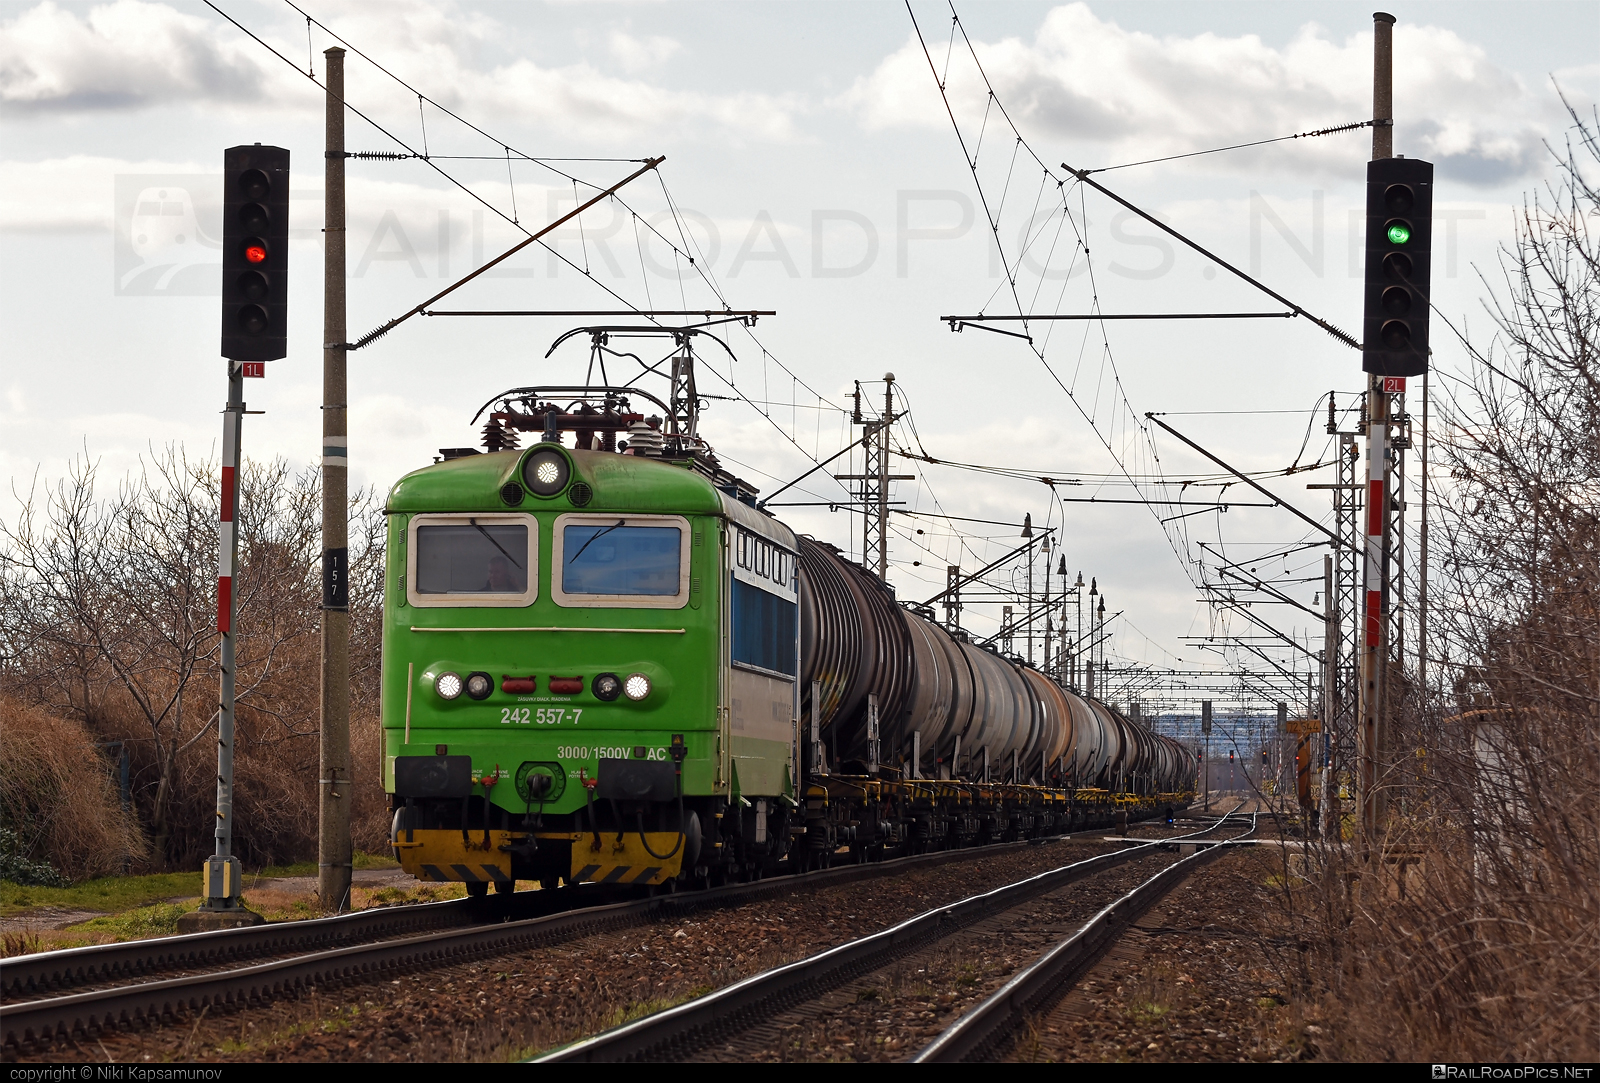 Škoda 73E - 242 557-7 operated by Railtrans International, s.r.o #RailtransInternational #kesselwagen #locomotive242 #plechac #rti #skoda #skoda73e #tankwagon